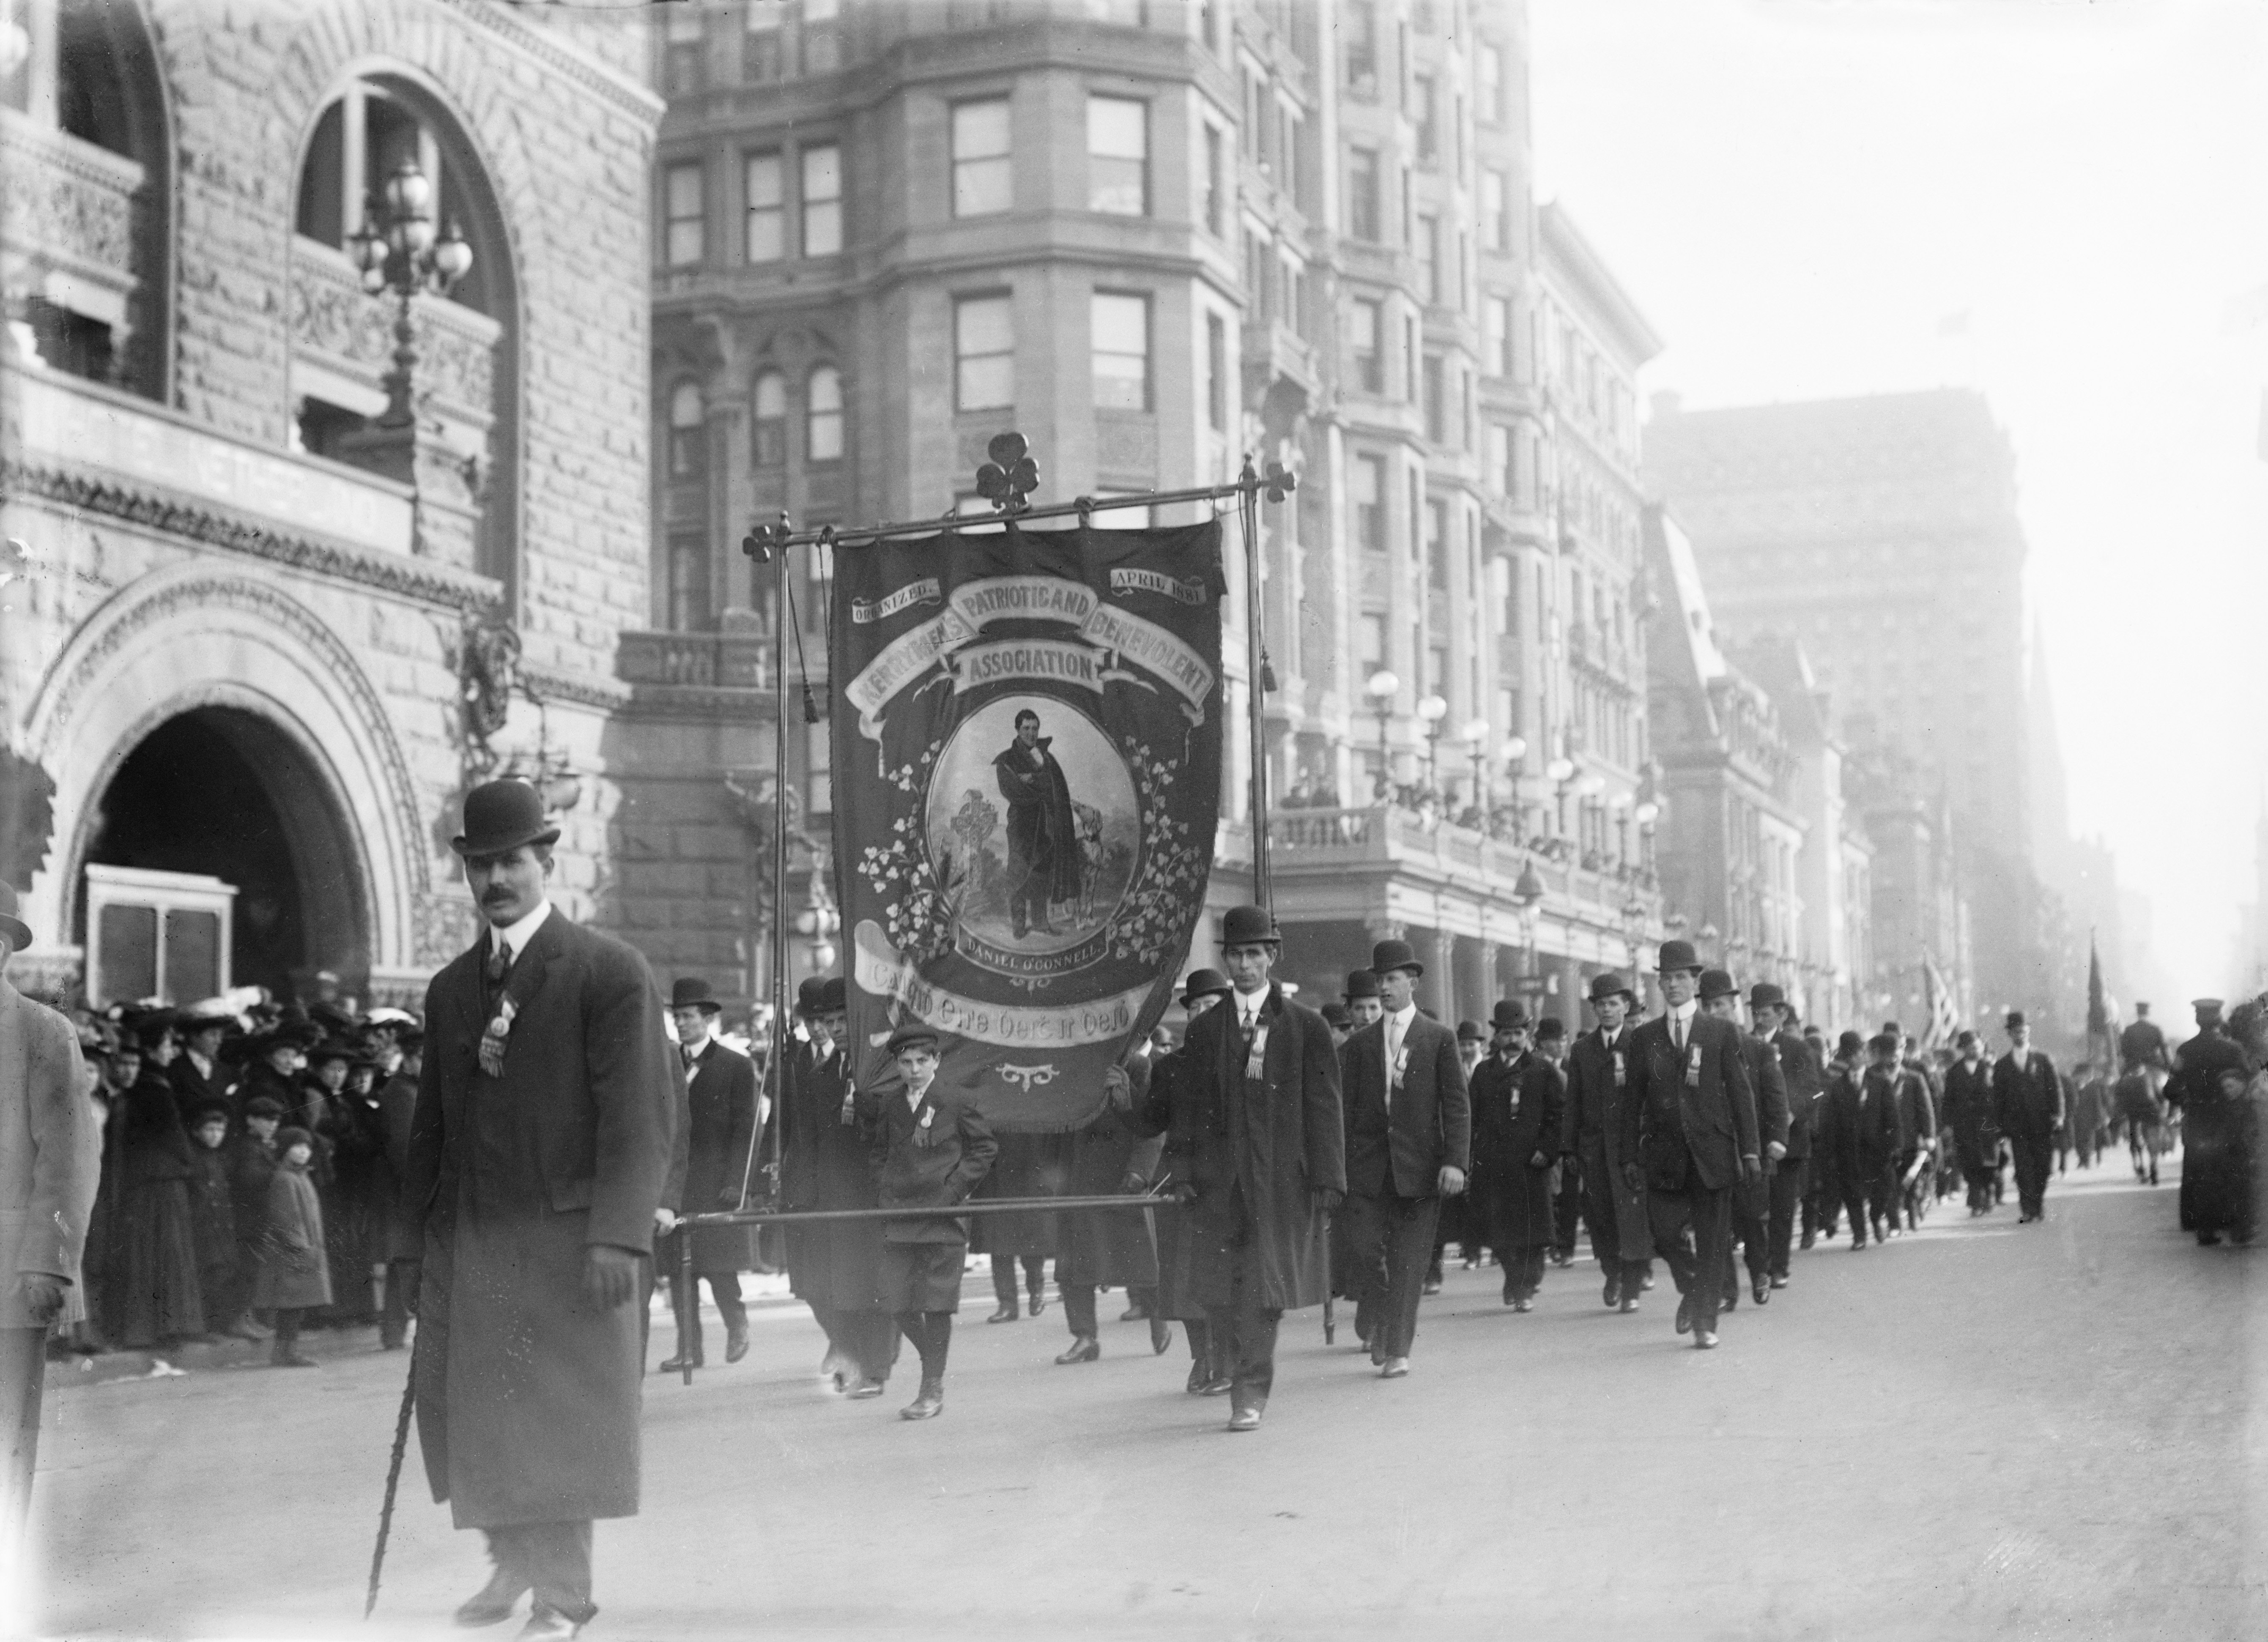 File:St. Patrick Parade, Fifth Ave., New York 1909.jpg - Wikipedia